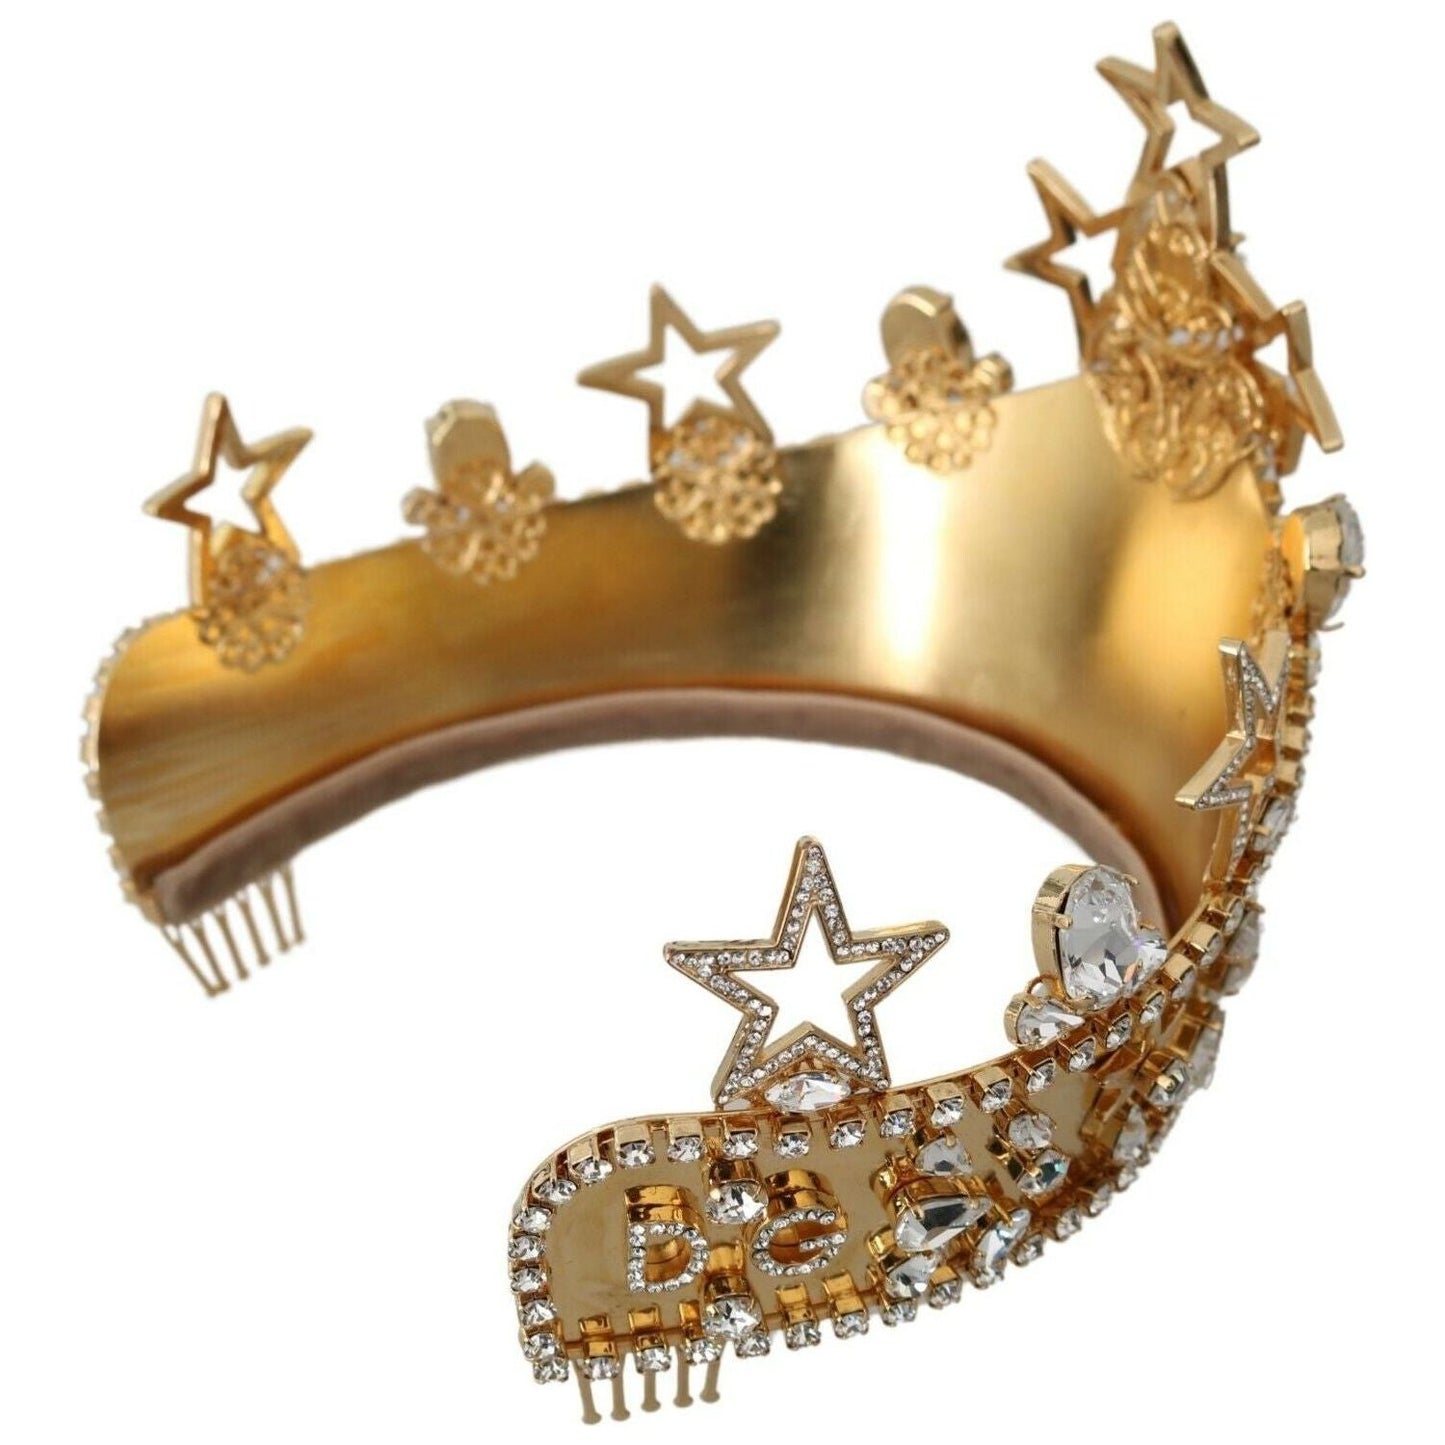 Dolce & Gabbana Regal Crystal Diadem Gold Tiara gold-crystal-star-strass-crown-logo-diadem-tiara